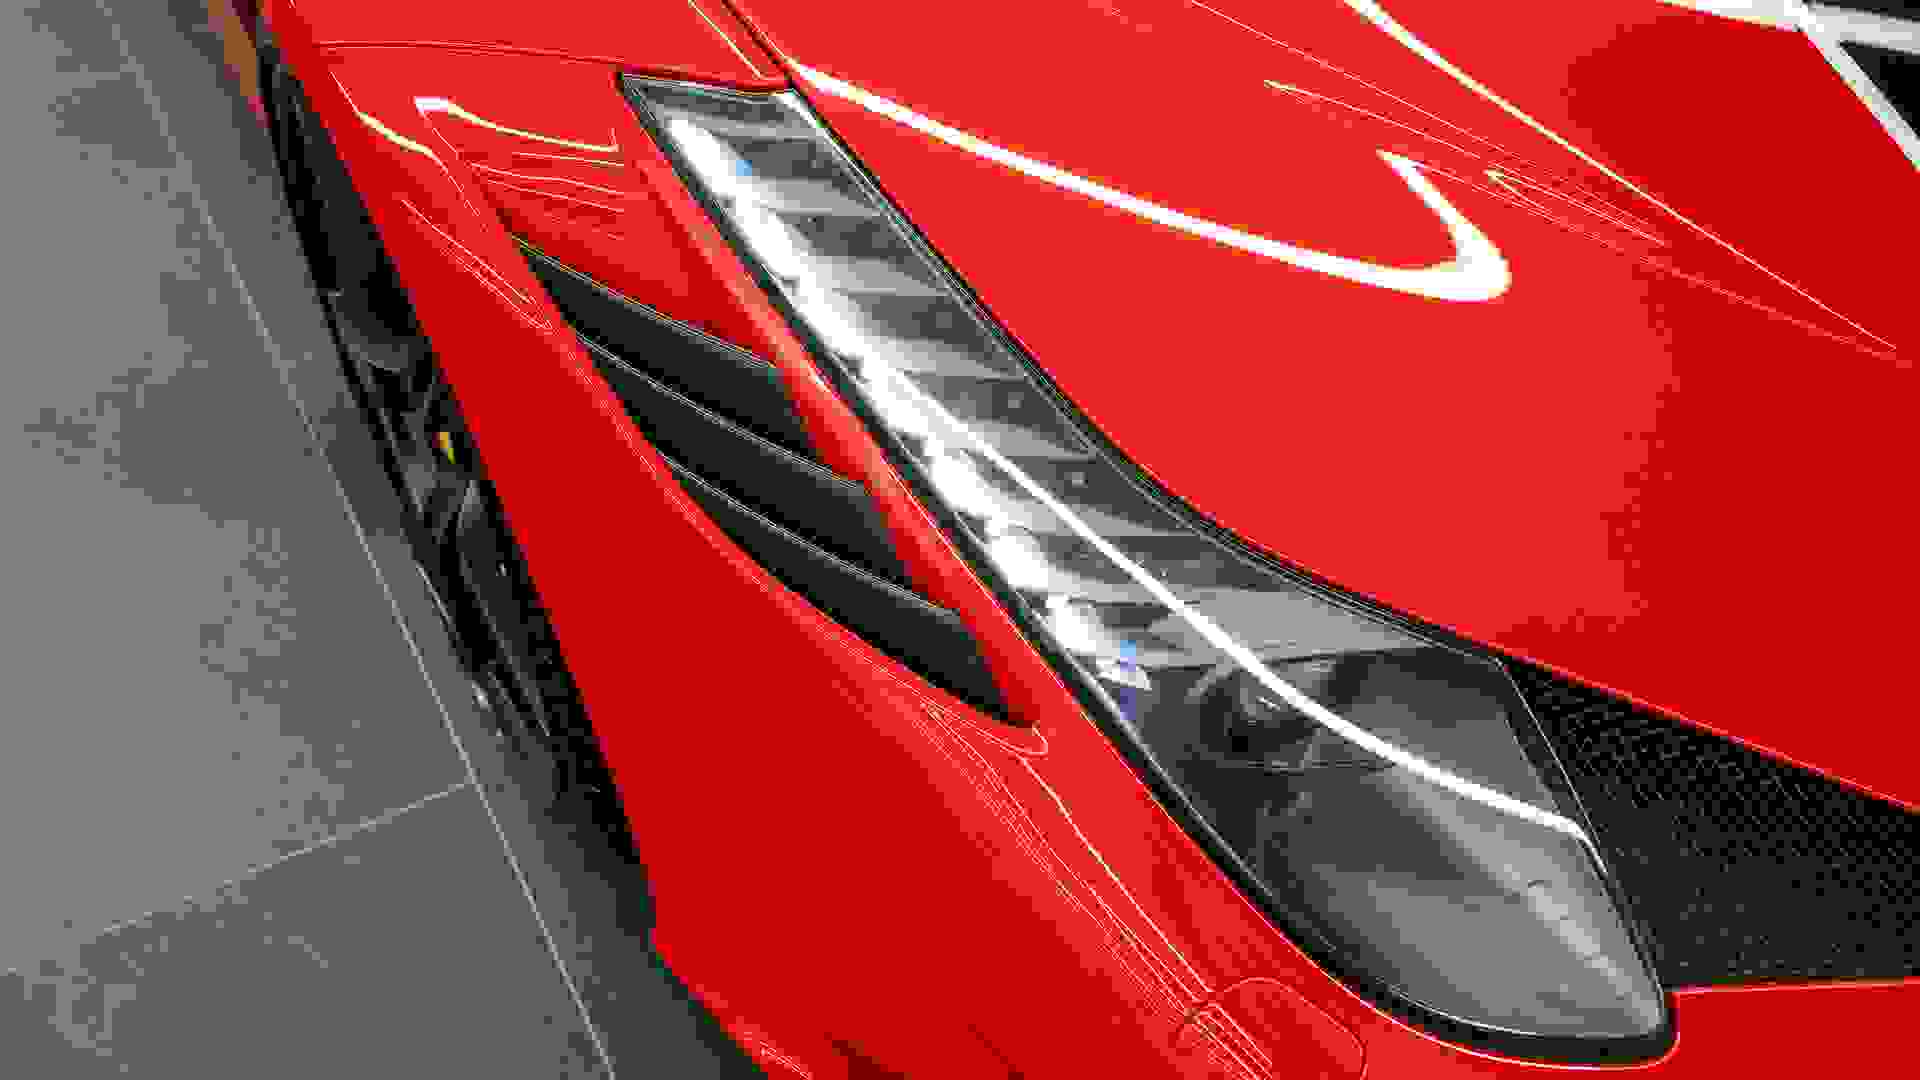 Ferrari 458 Photo 933515c8-95bf-4ae8-868a-eacbacd0741c.jpg